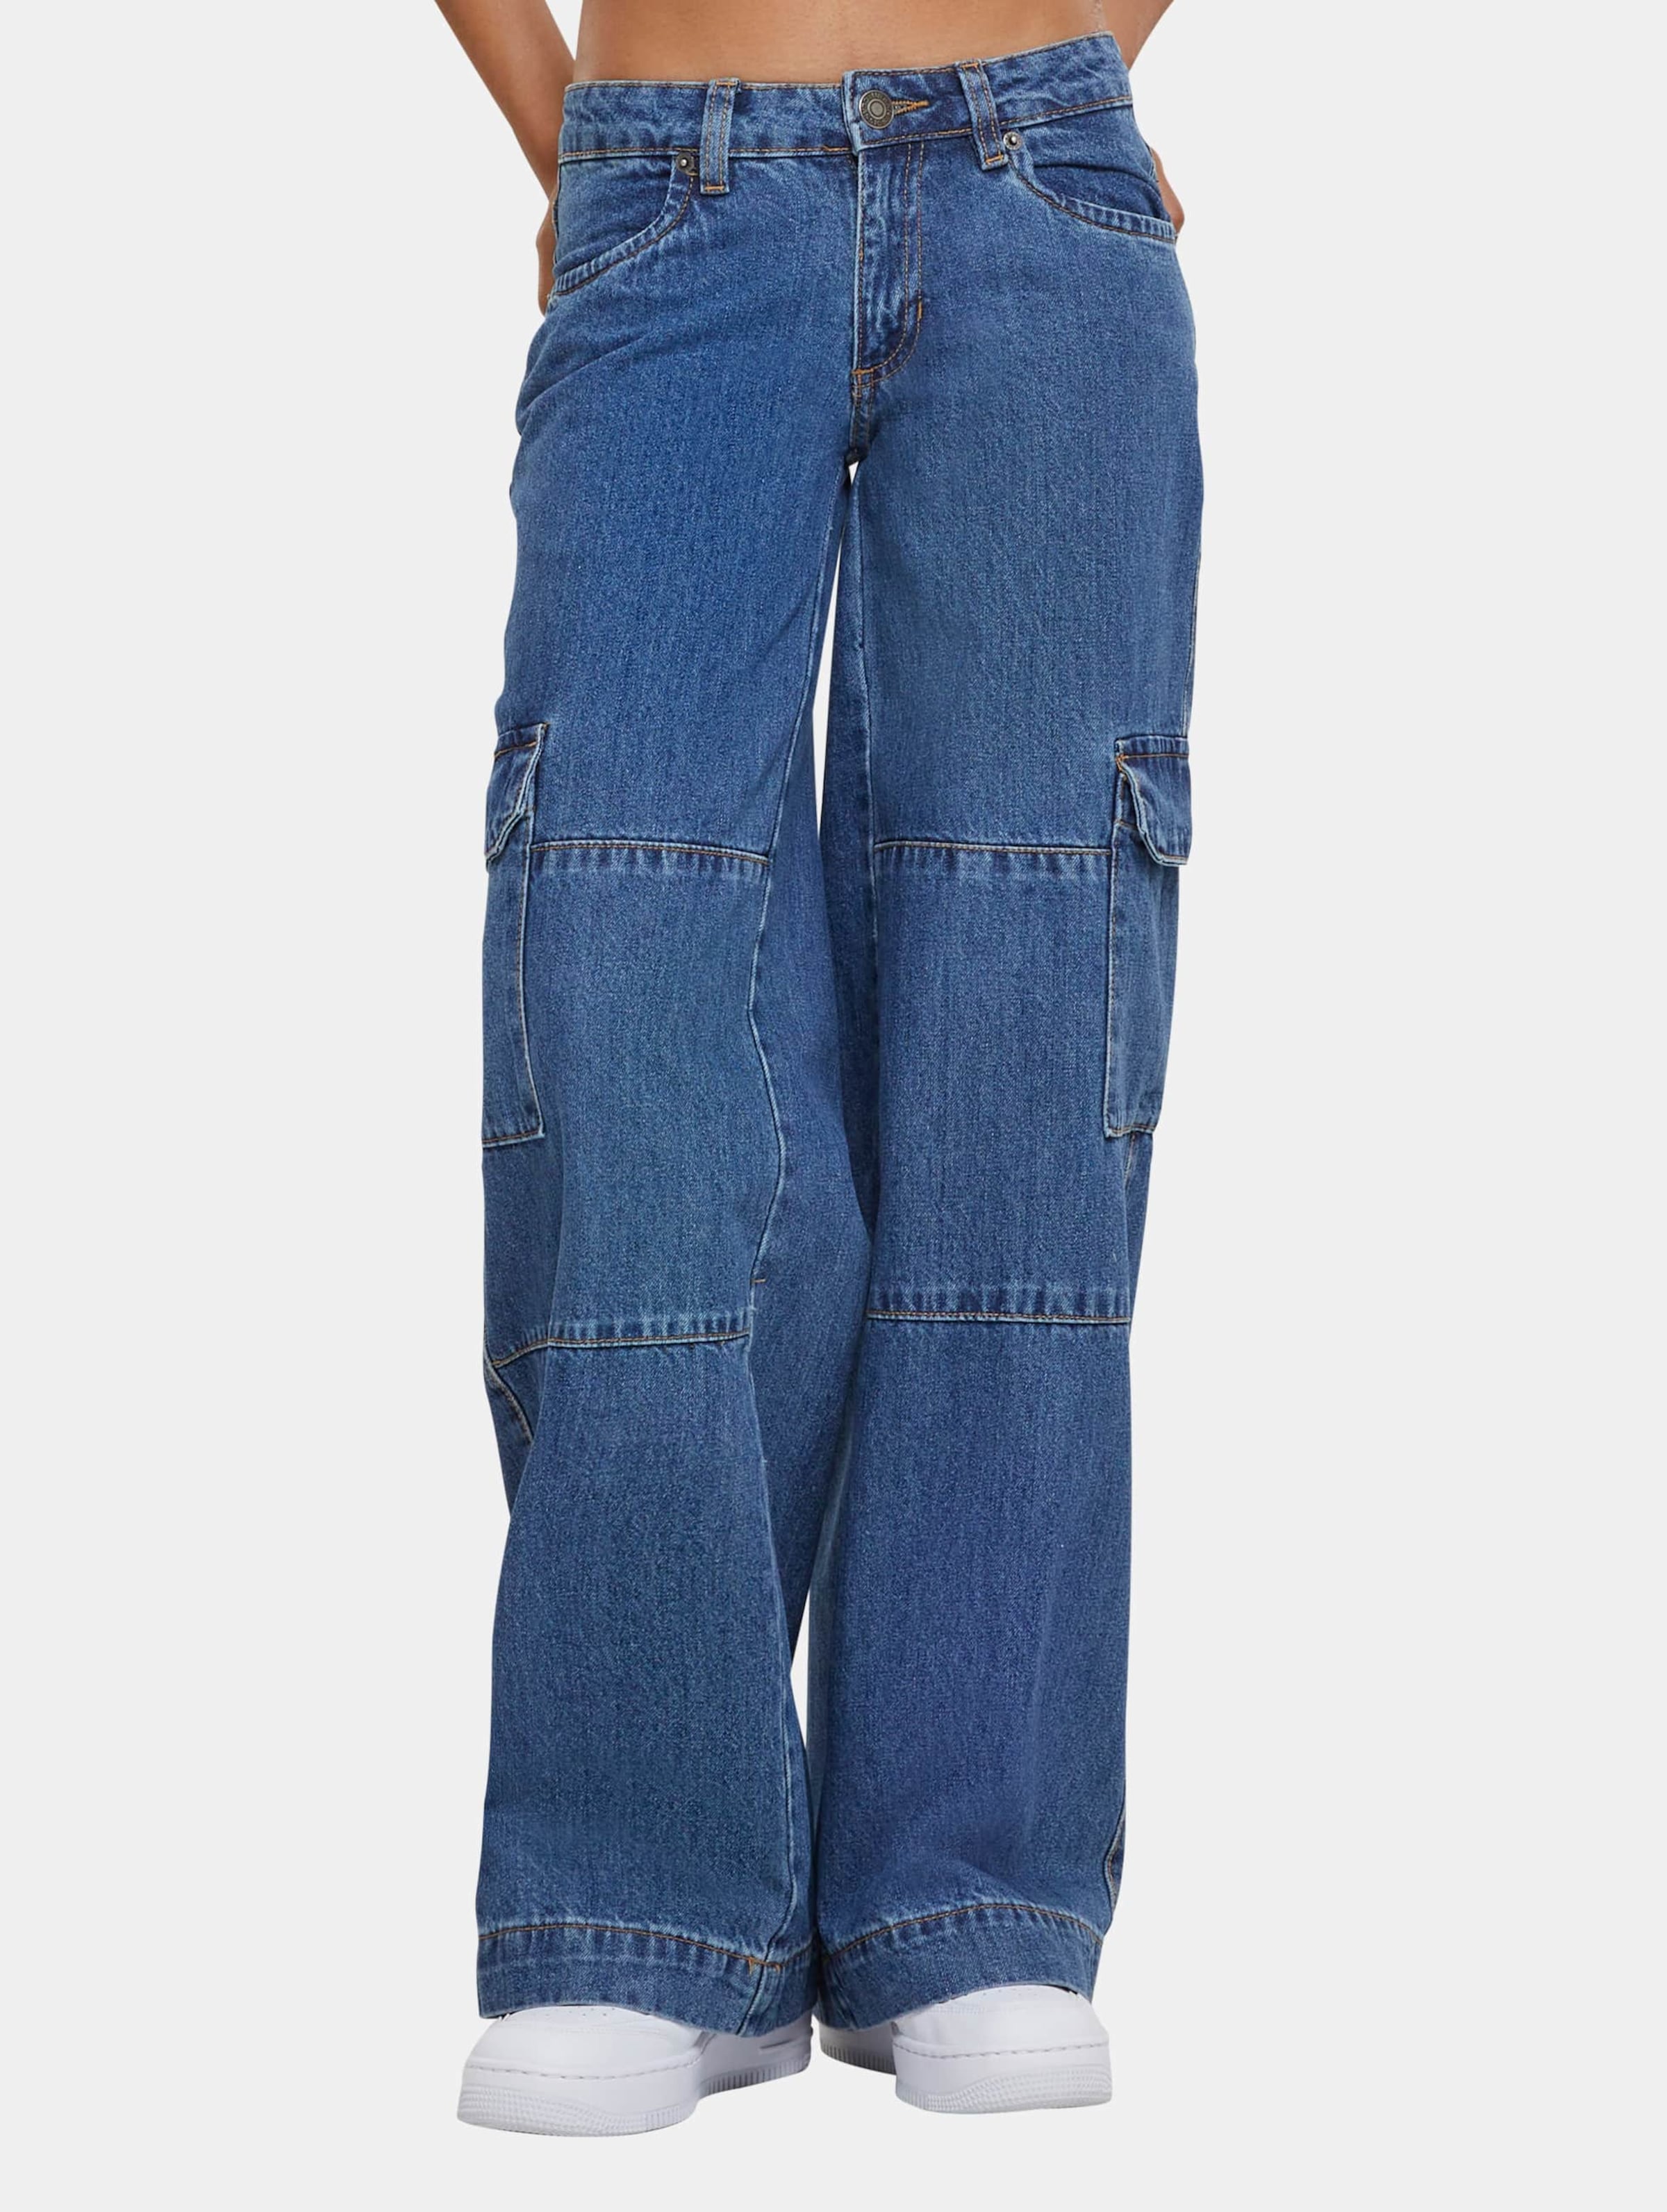 Urban Classics - Low Waist Denim Cargo trousers - Taille, 28 inch - Donkerblauw